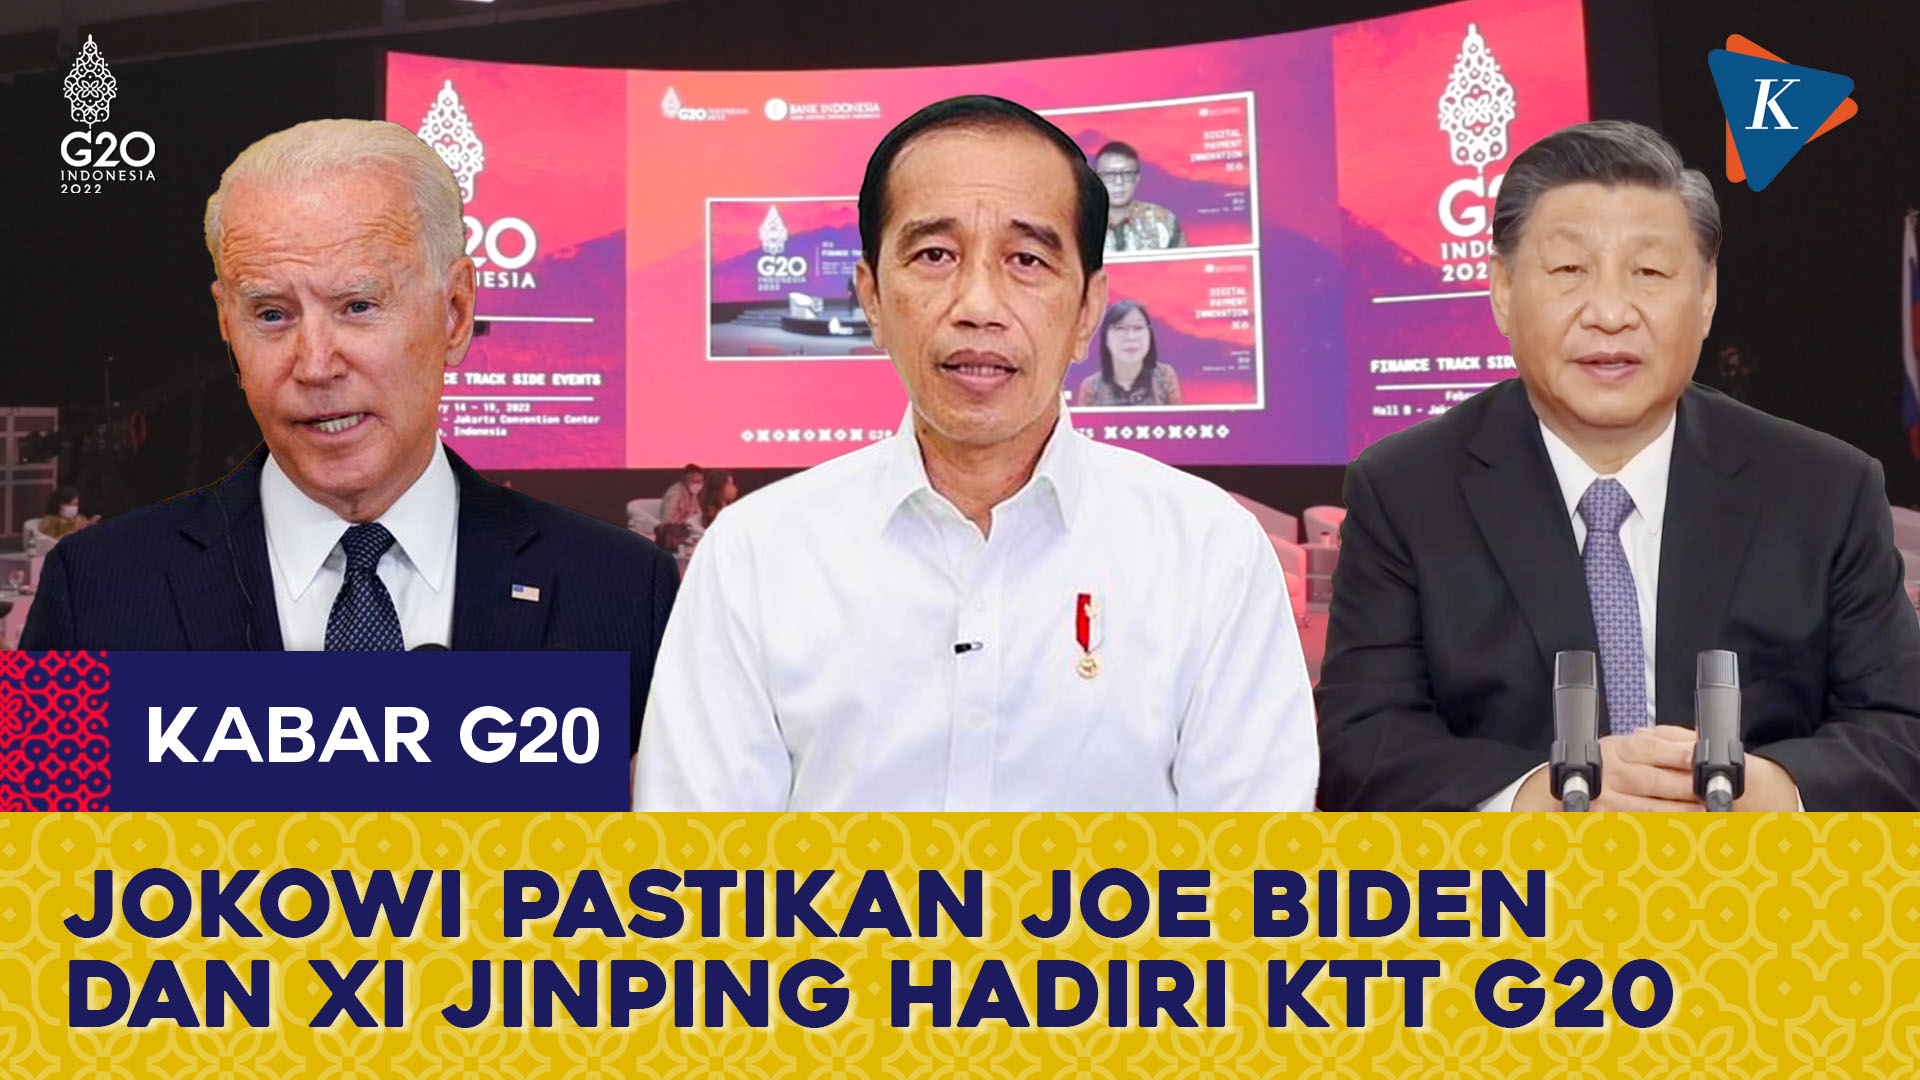 Jokowi Pastikan Biden dan Xi Jinping Hadiri KTT G20